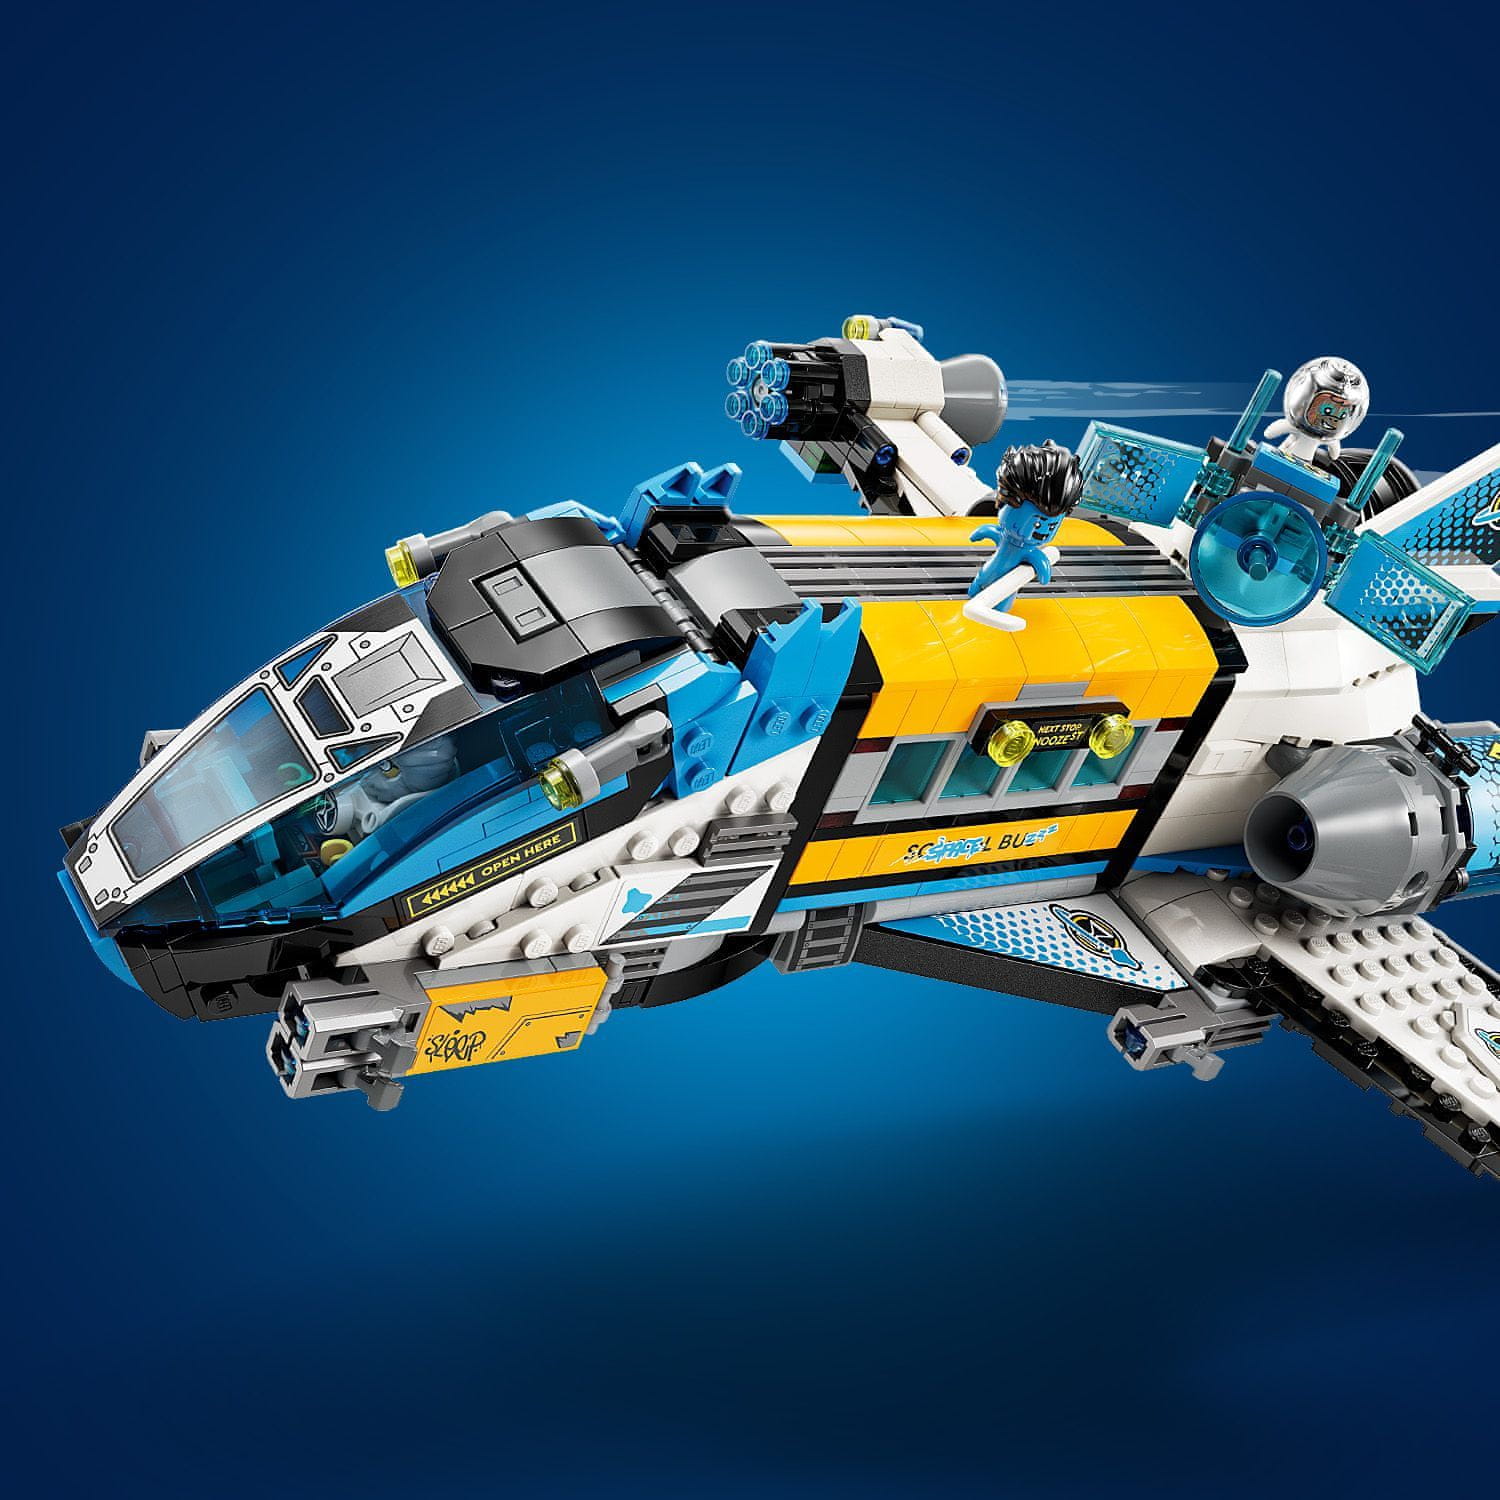 LEGO DREAMZzz 71460 Vesmírný autobus pana Oze